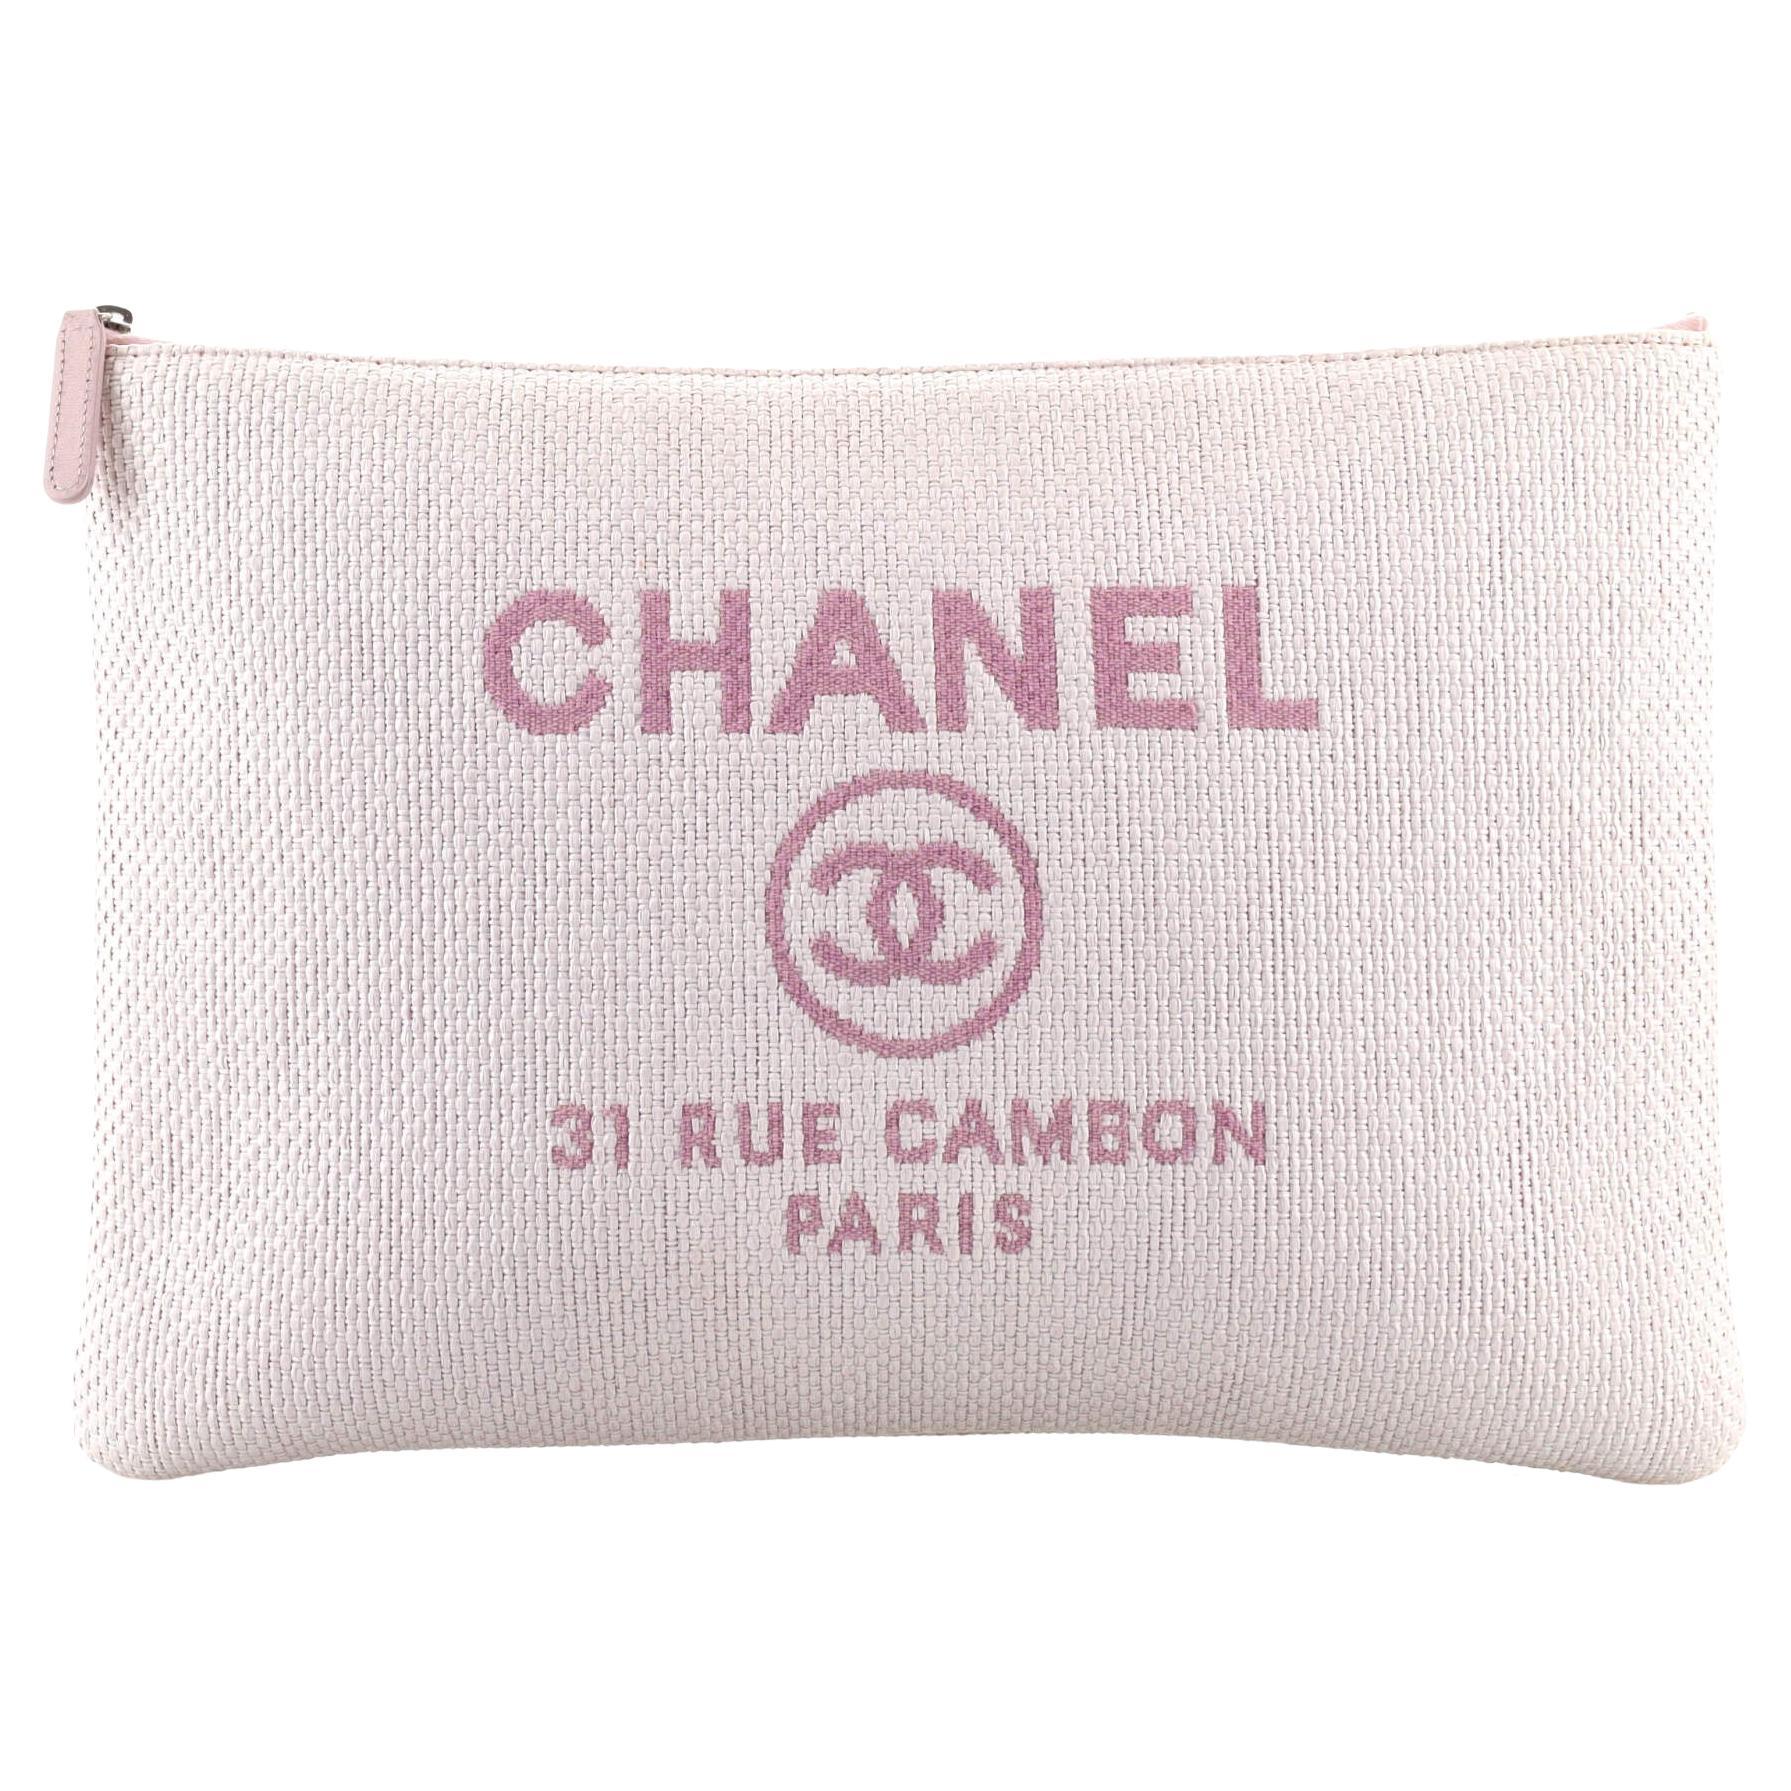 Chanel Deauville Pouch Raffia Large